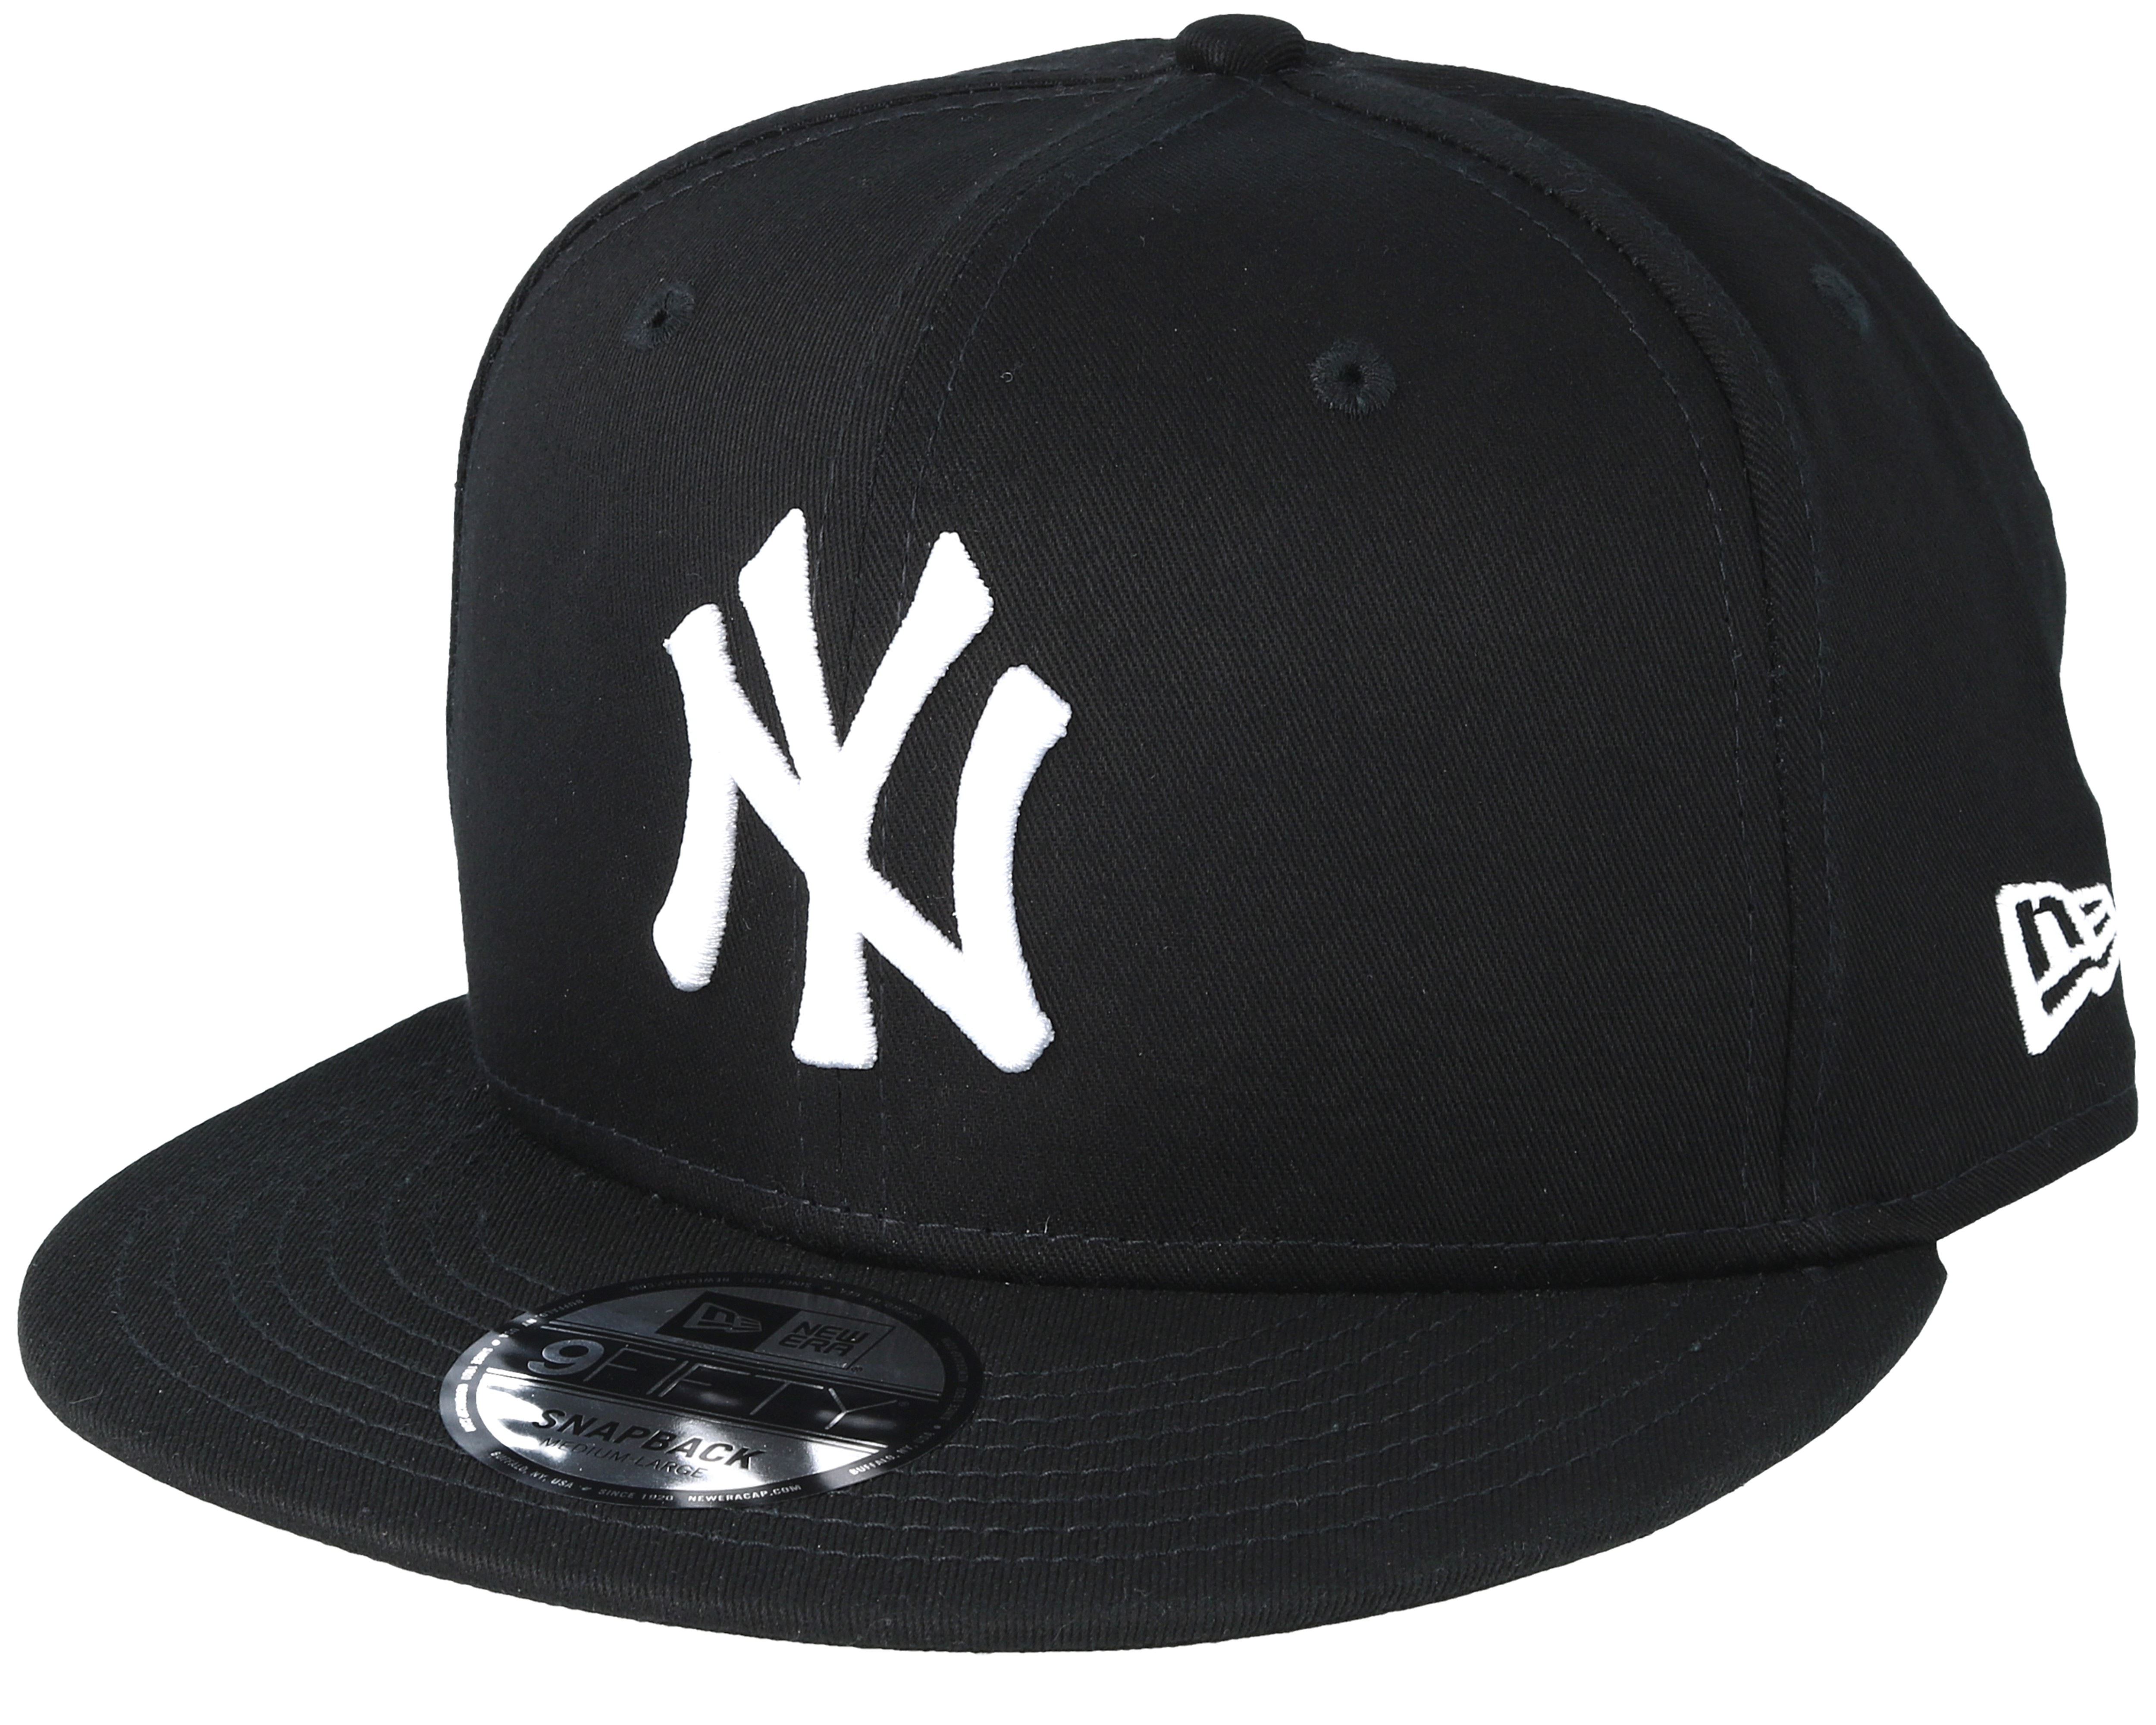 New York Yankees 9FIFTY Black/White Snapback - New Era cap | Hatstore.co.uk